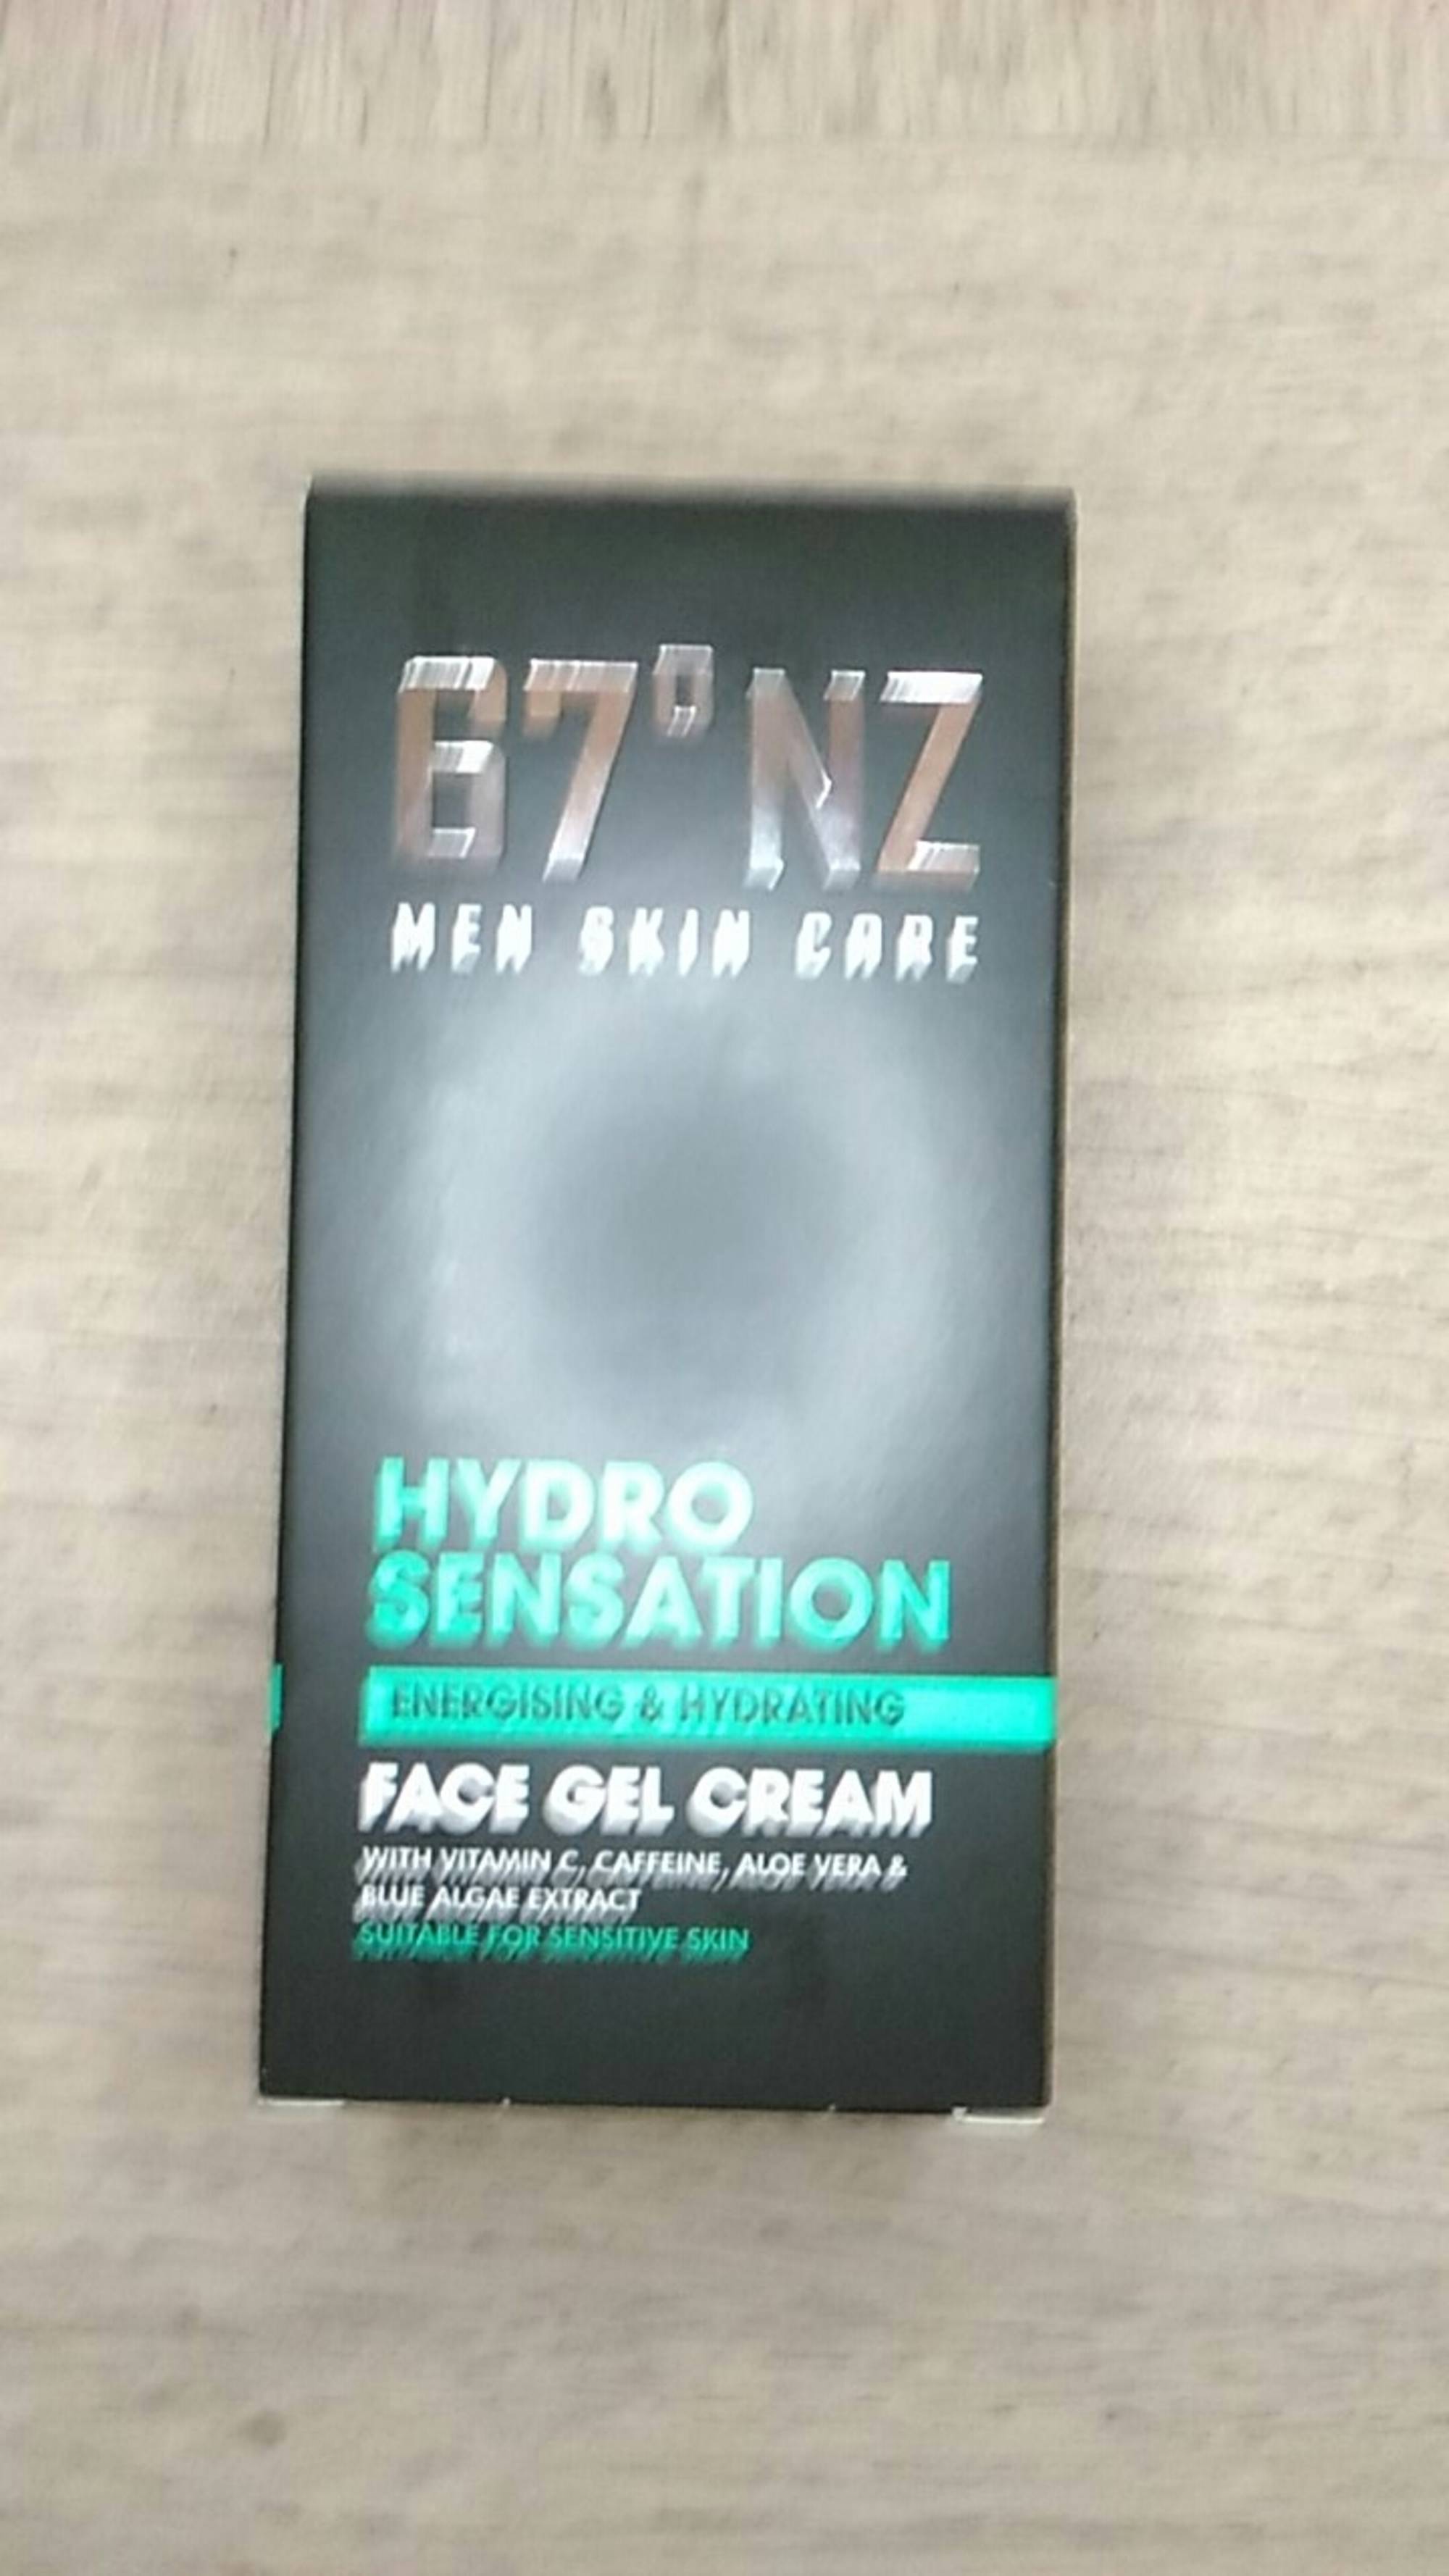 67° NZ - Hydro sensation - Face gel cream